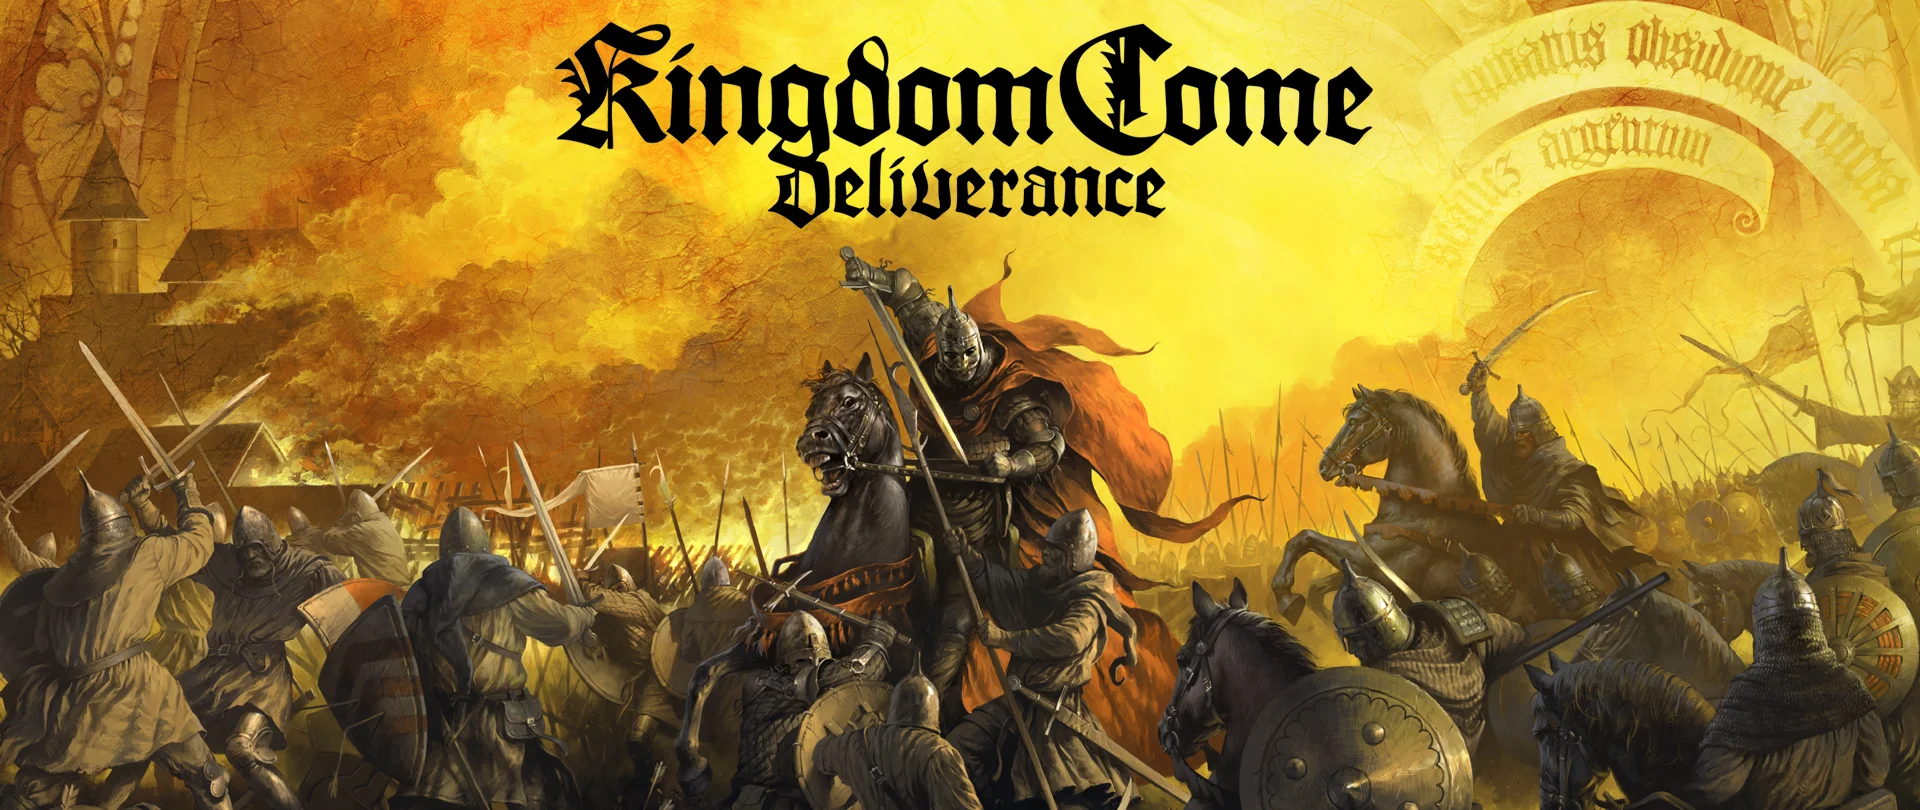 Kingdom Come скоро получит «королевское издание» — со всеми дополнениями! - фото 1